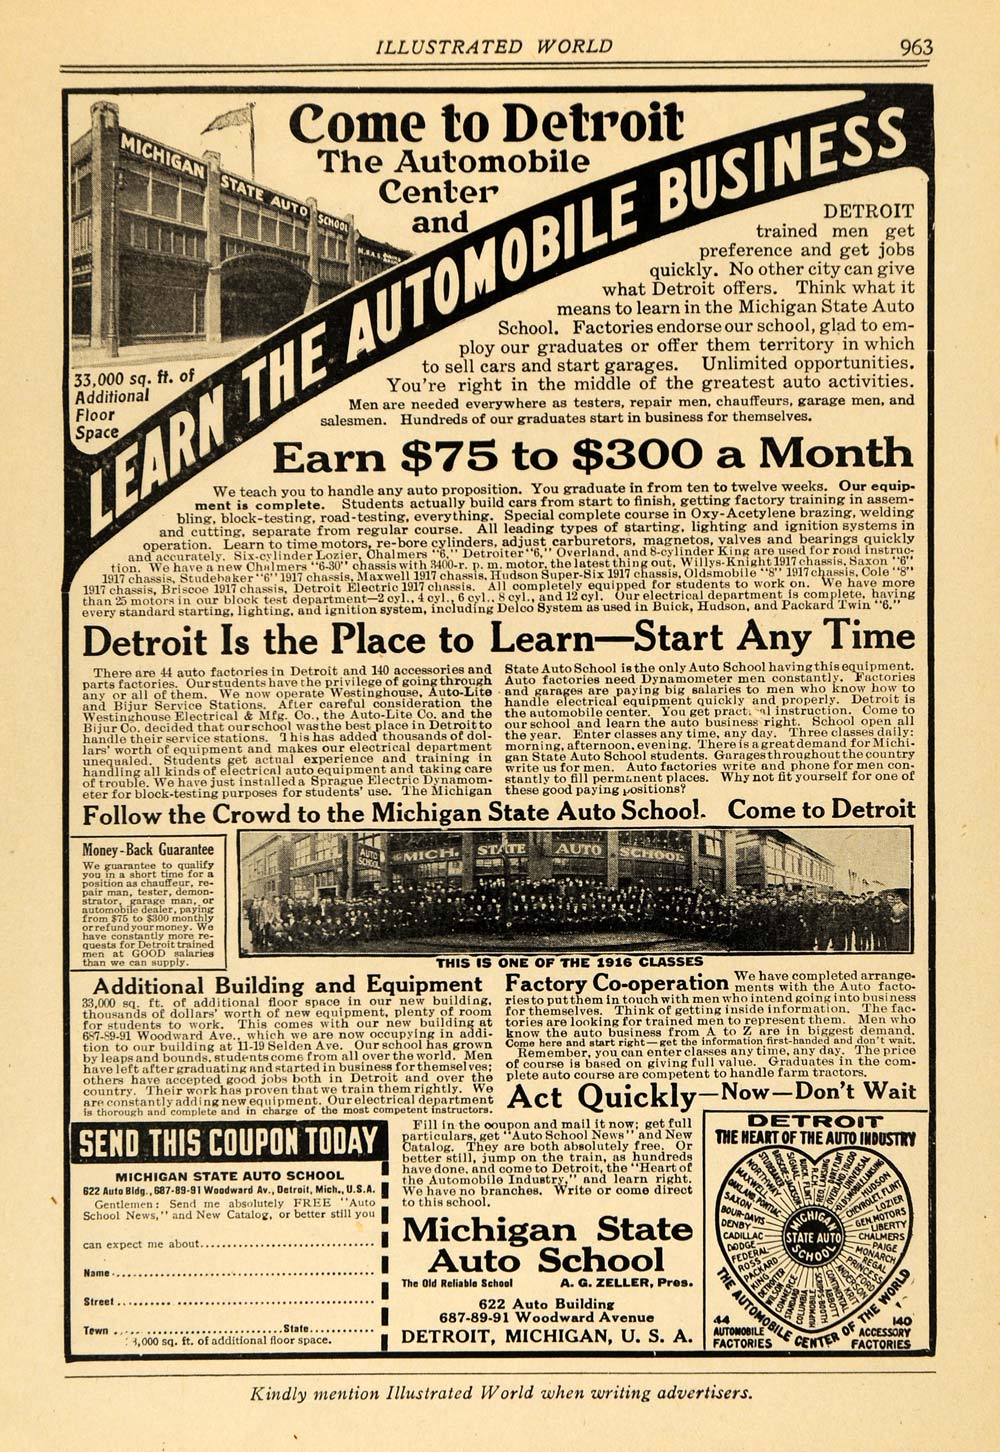 1917 Ad Michigan State Auto School Detroit Garage Job - ORIGINAL ILW1